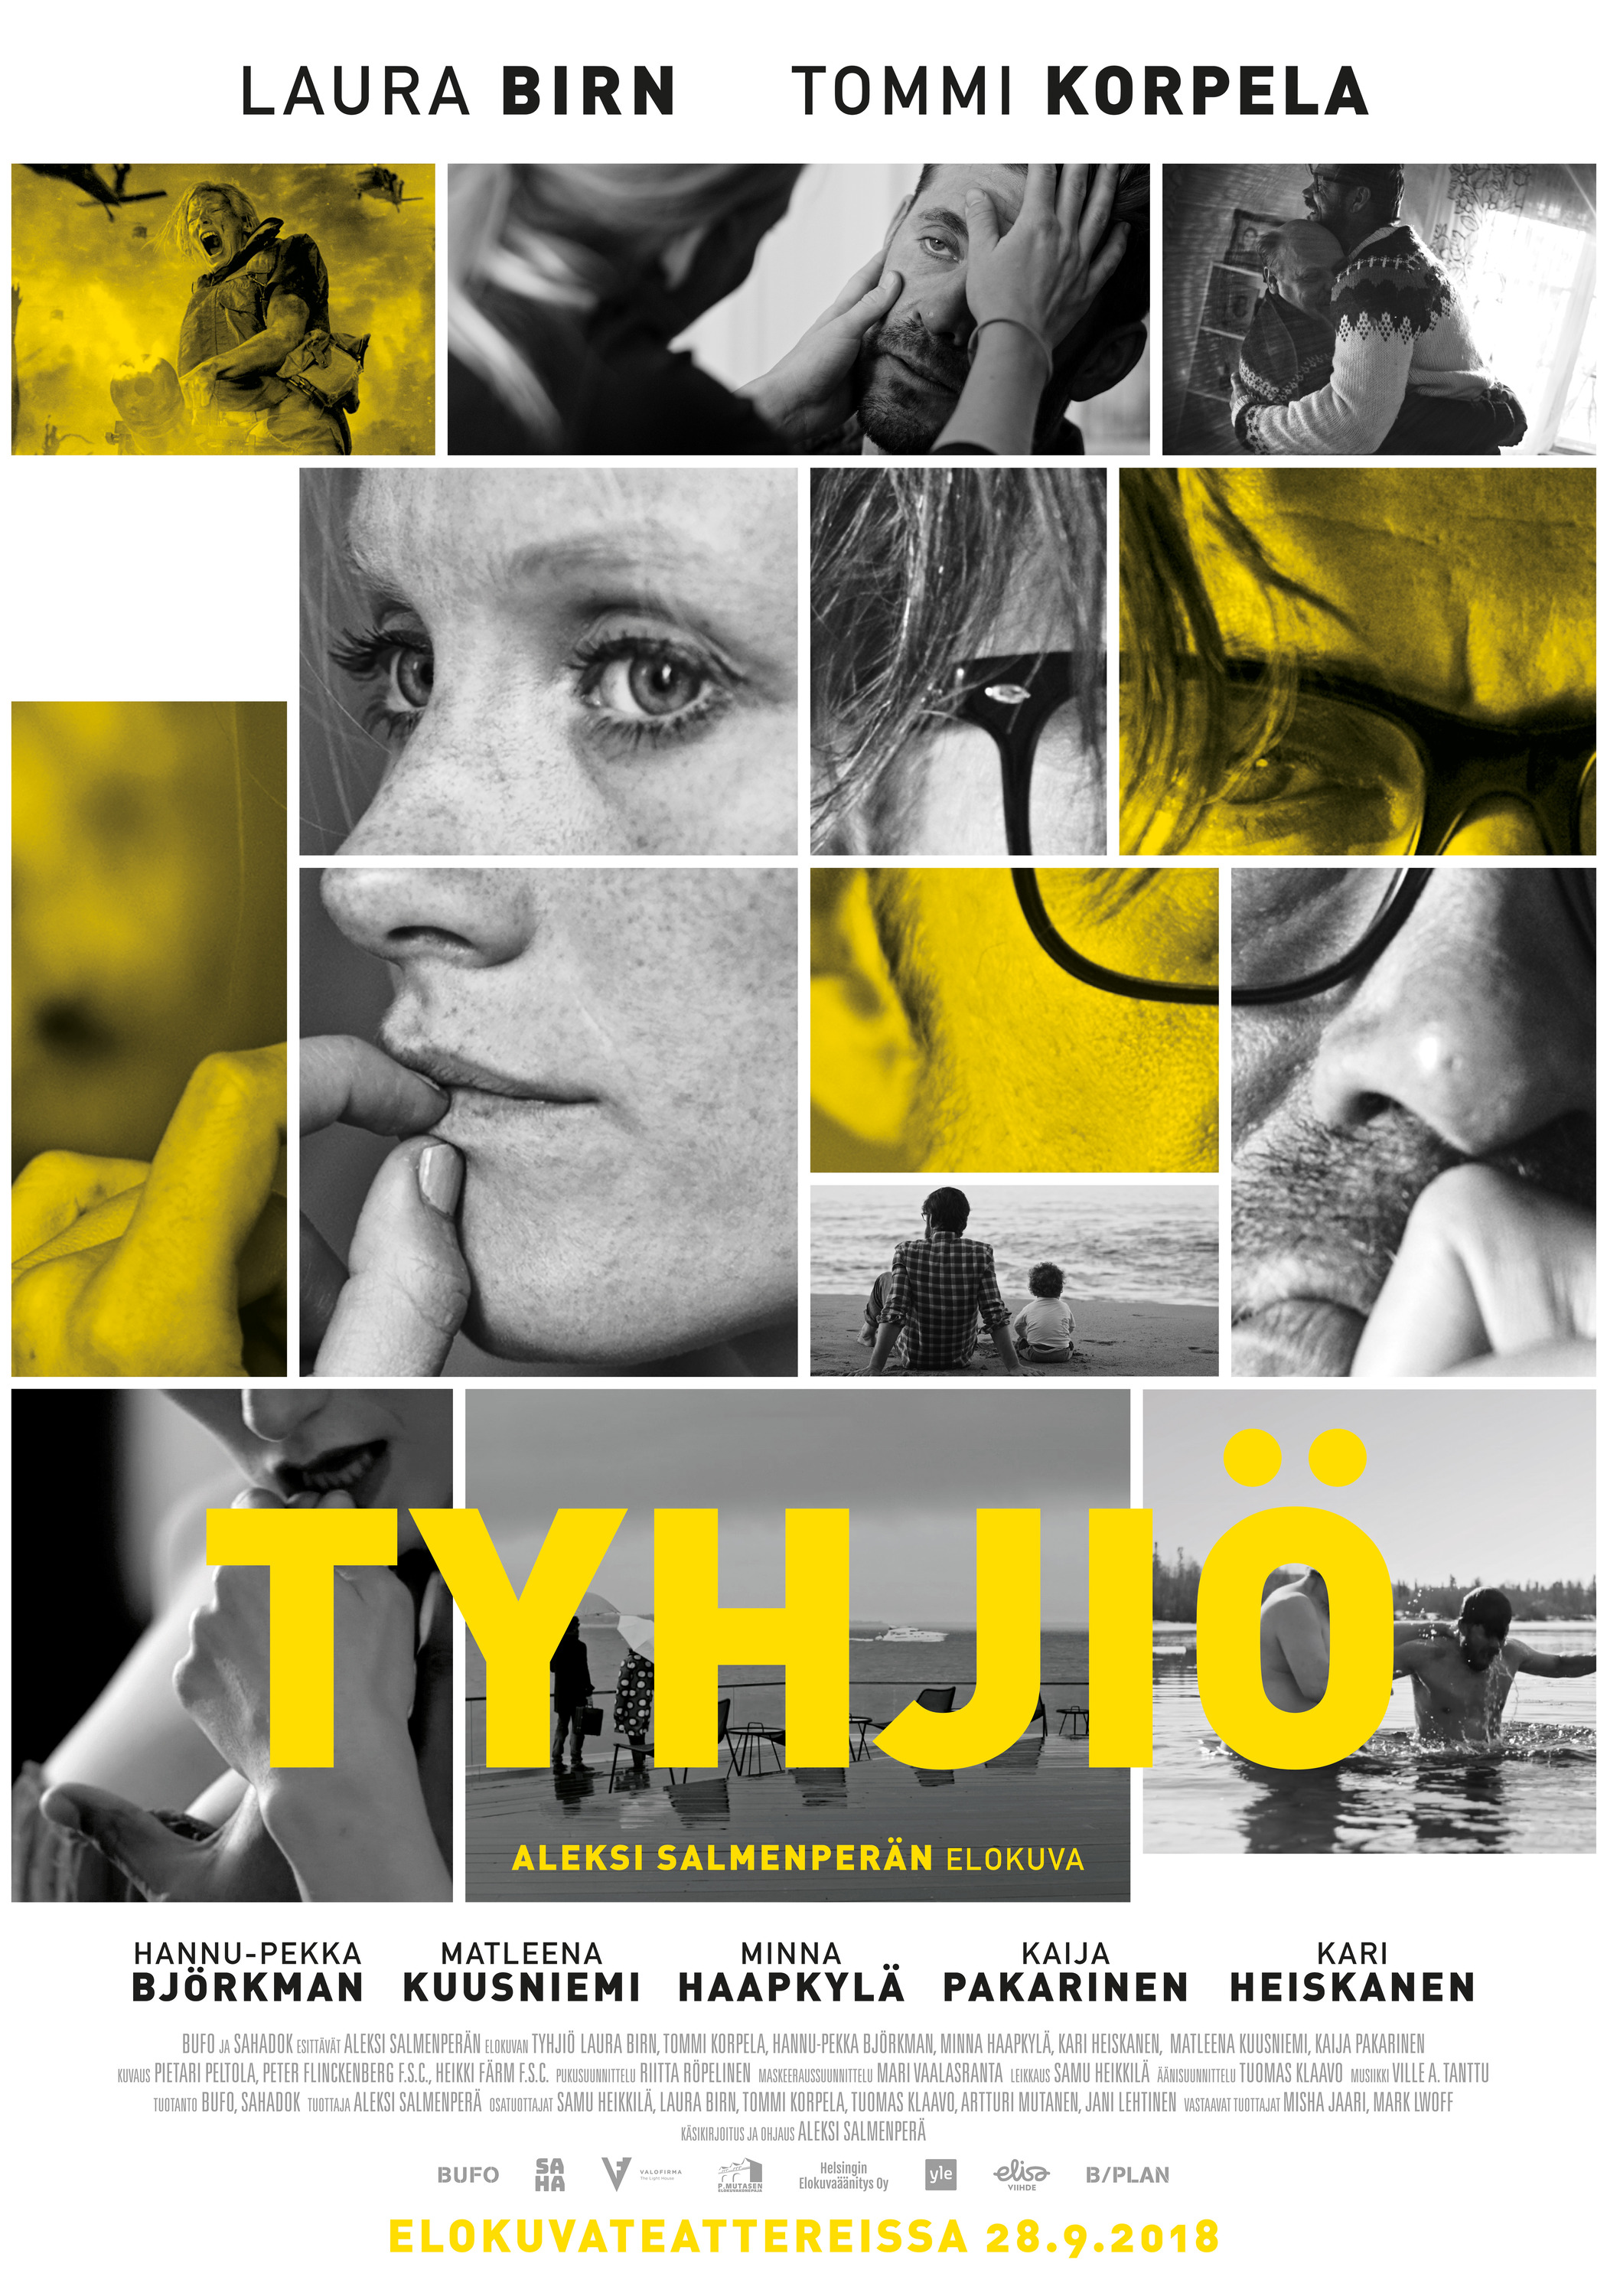 Mega Sized Movie Poster Image for Tyhjiö 